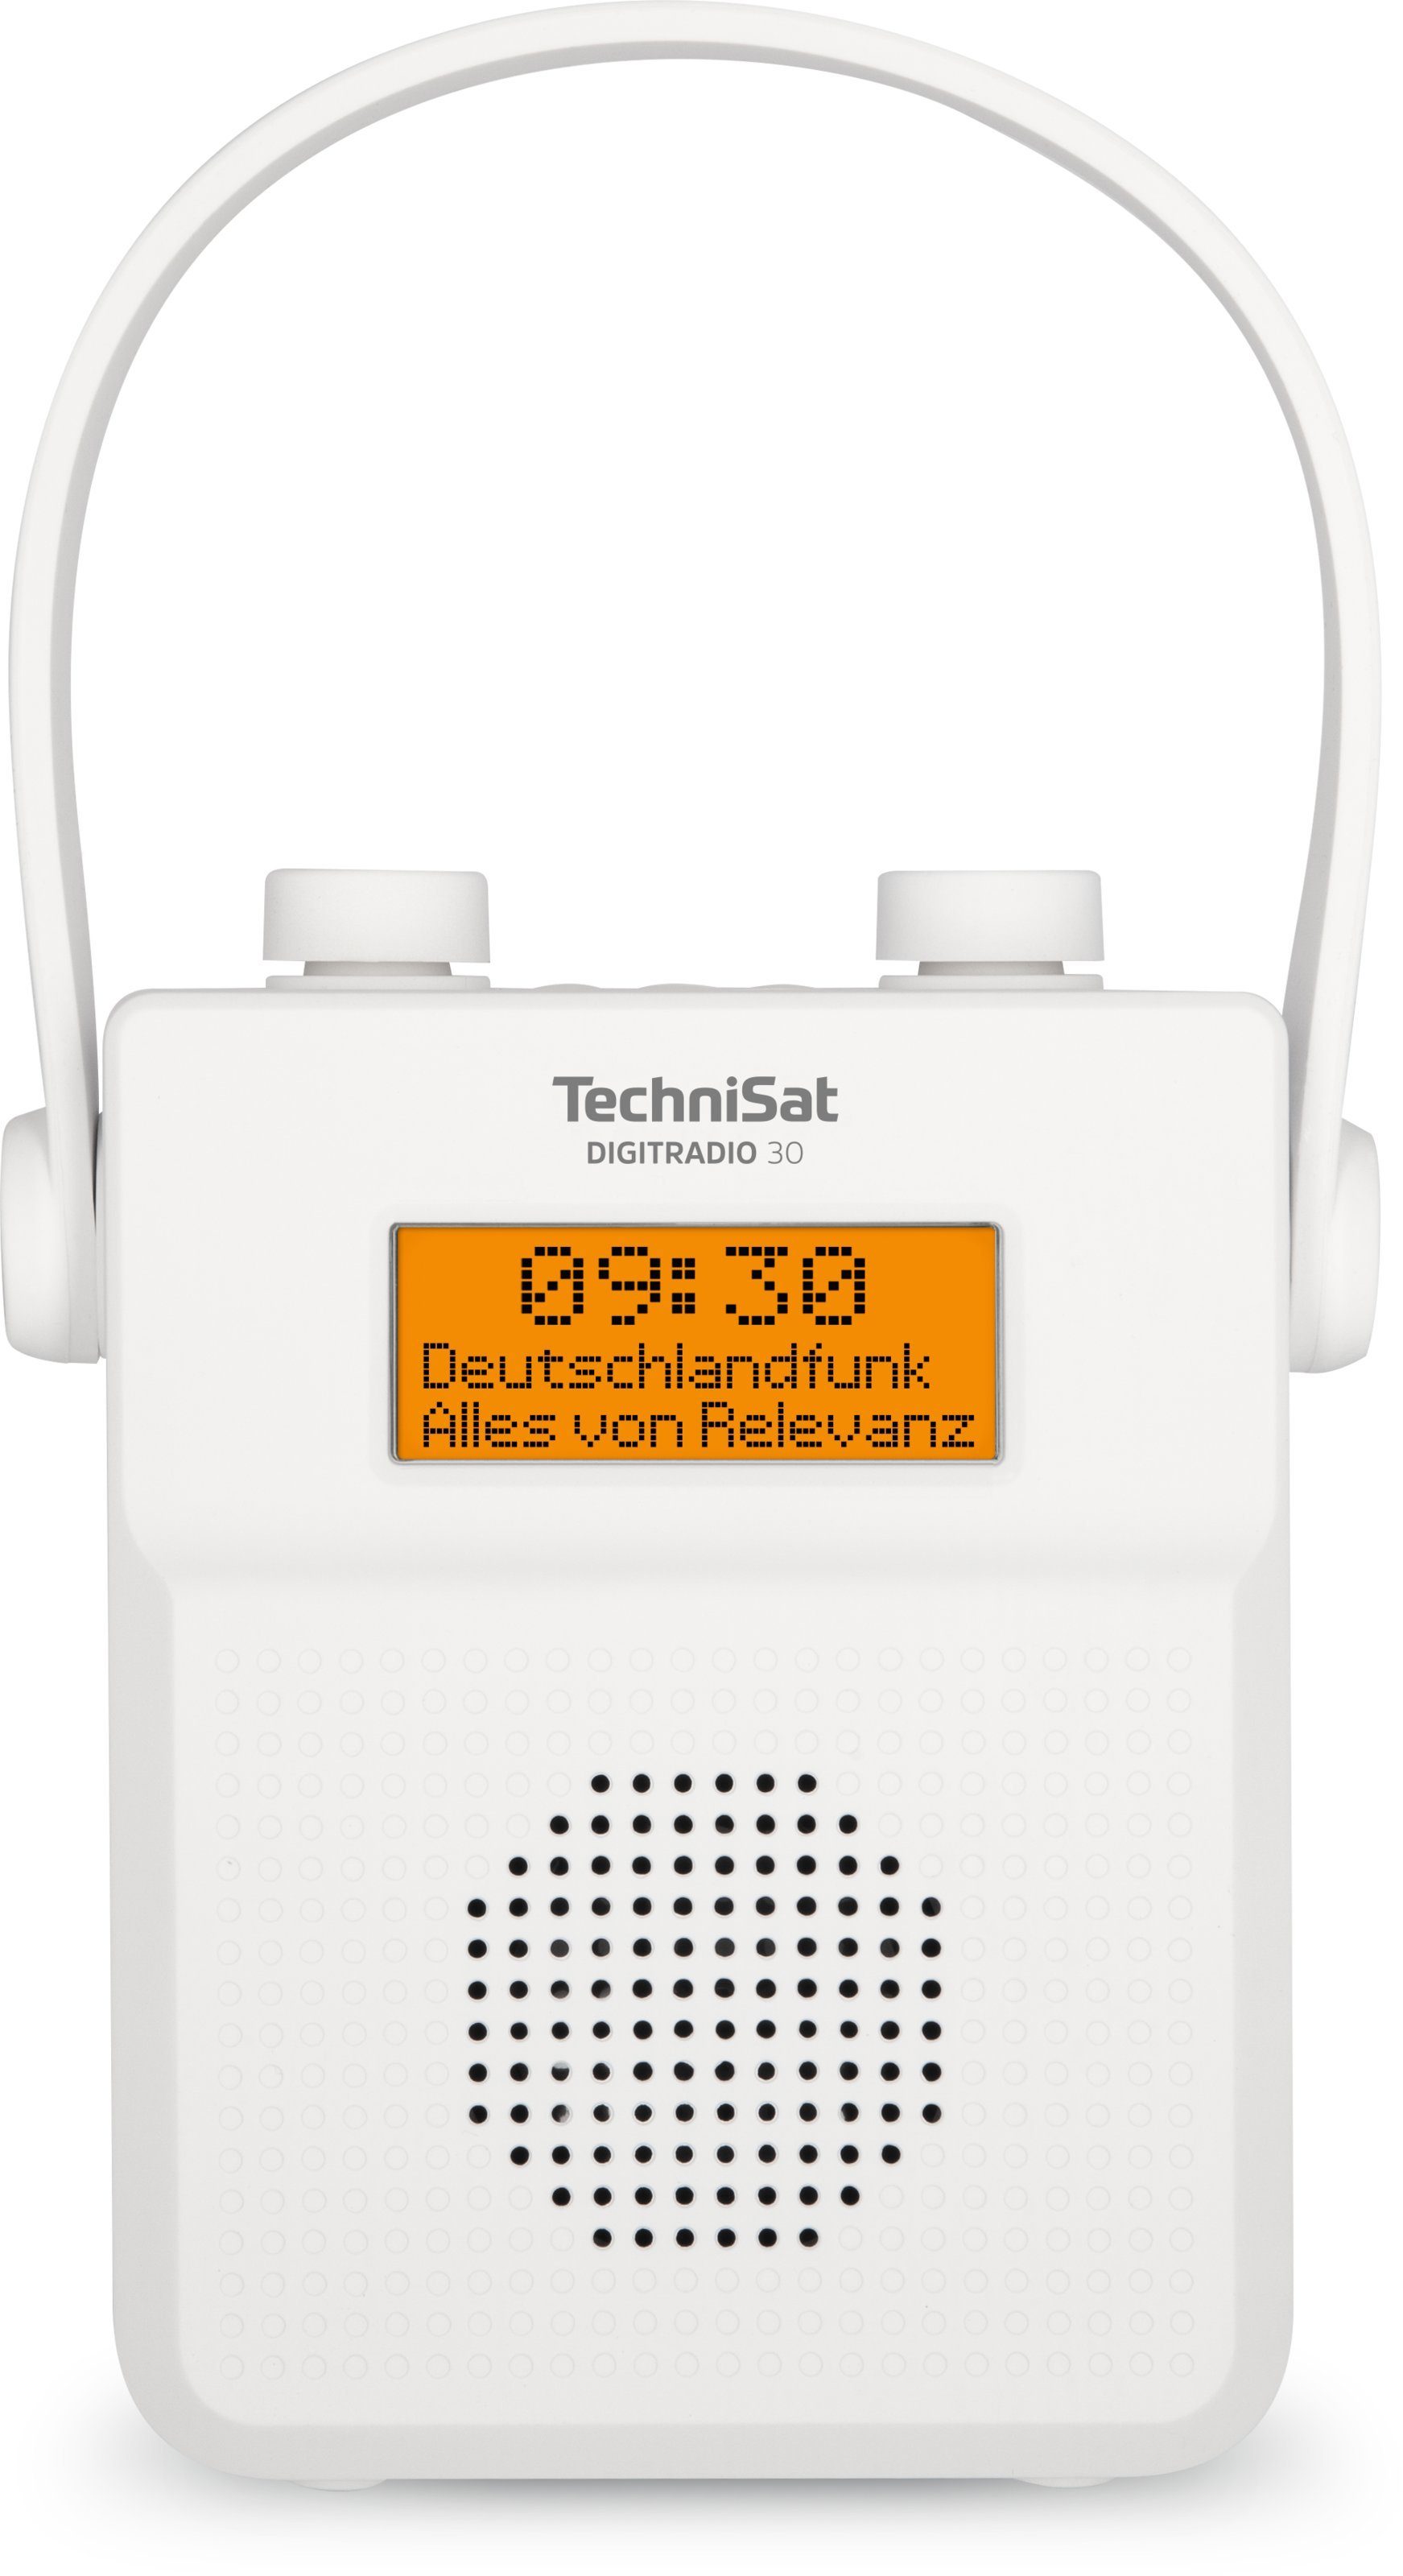 TechniSat DIGITRADIO 30 Duschradio Digitalradio (DAB) (Digitalradio (DAB), UKW-Radio mit RDS, 2,00 W, wasserdicht, tragbar, Bluetooth-Audiostreaming) weiß